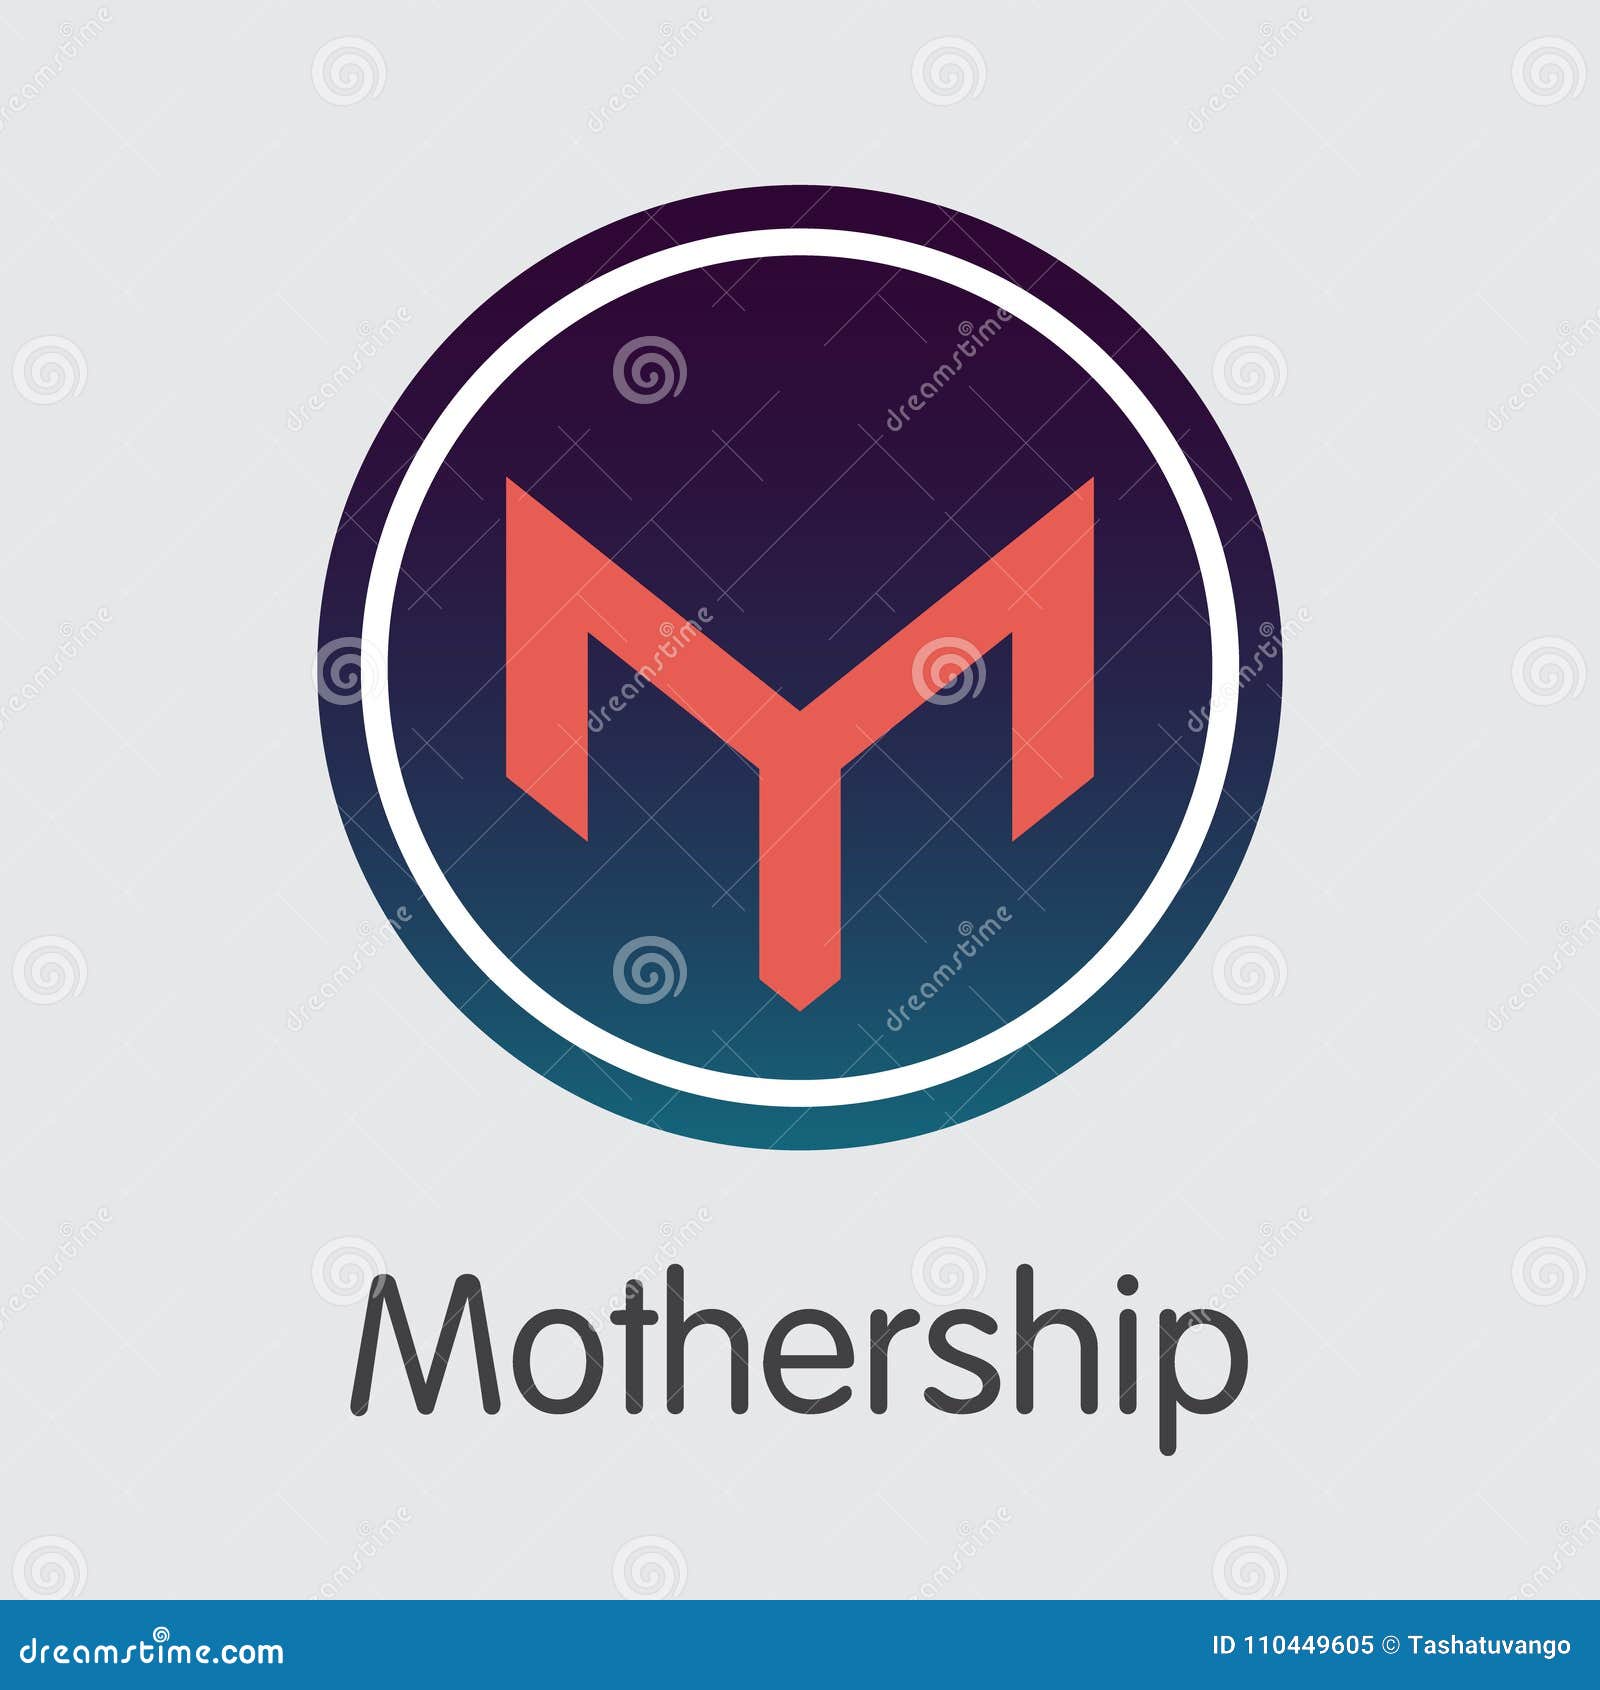 Mothership - digital asset exchange platform :: Behance